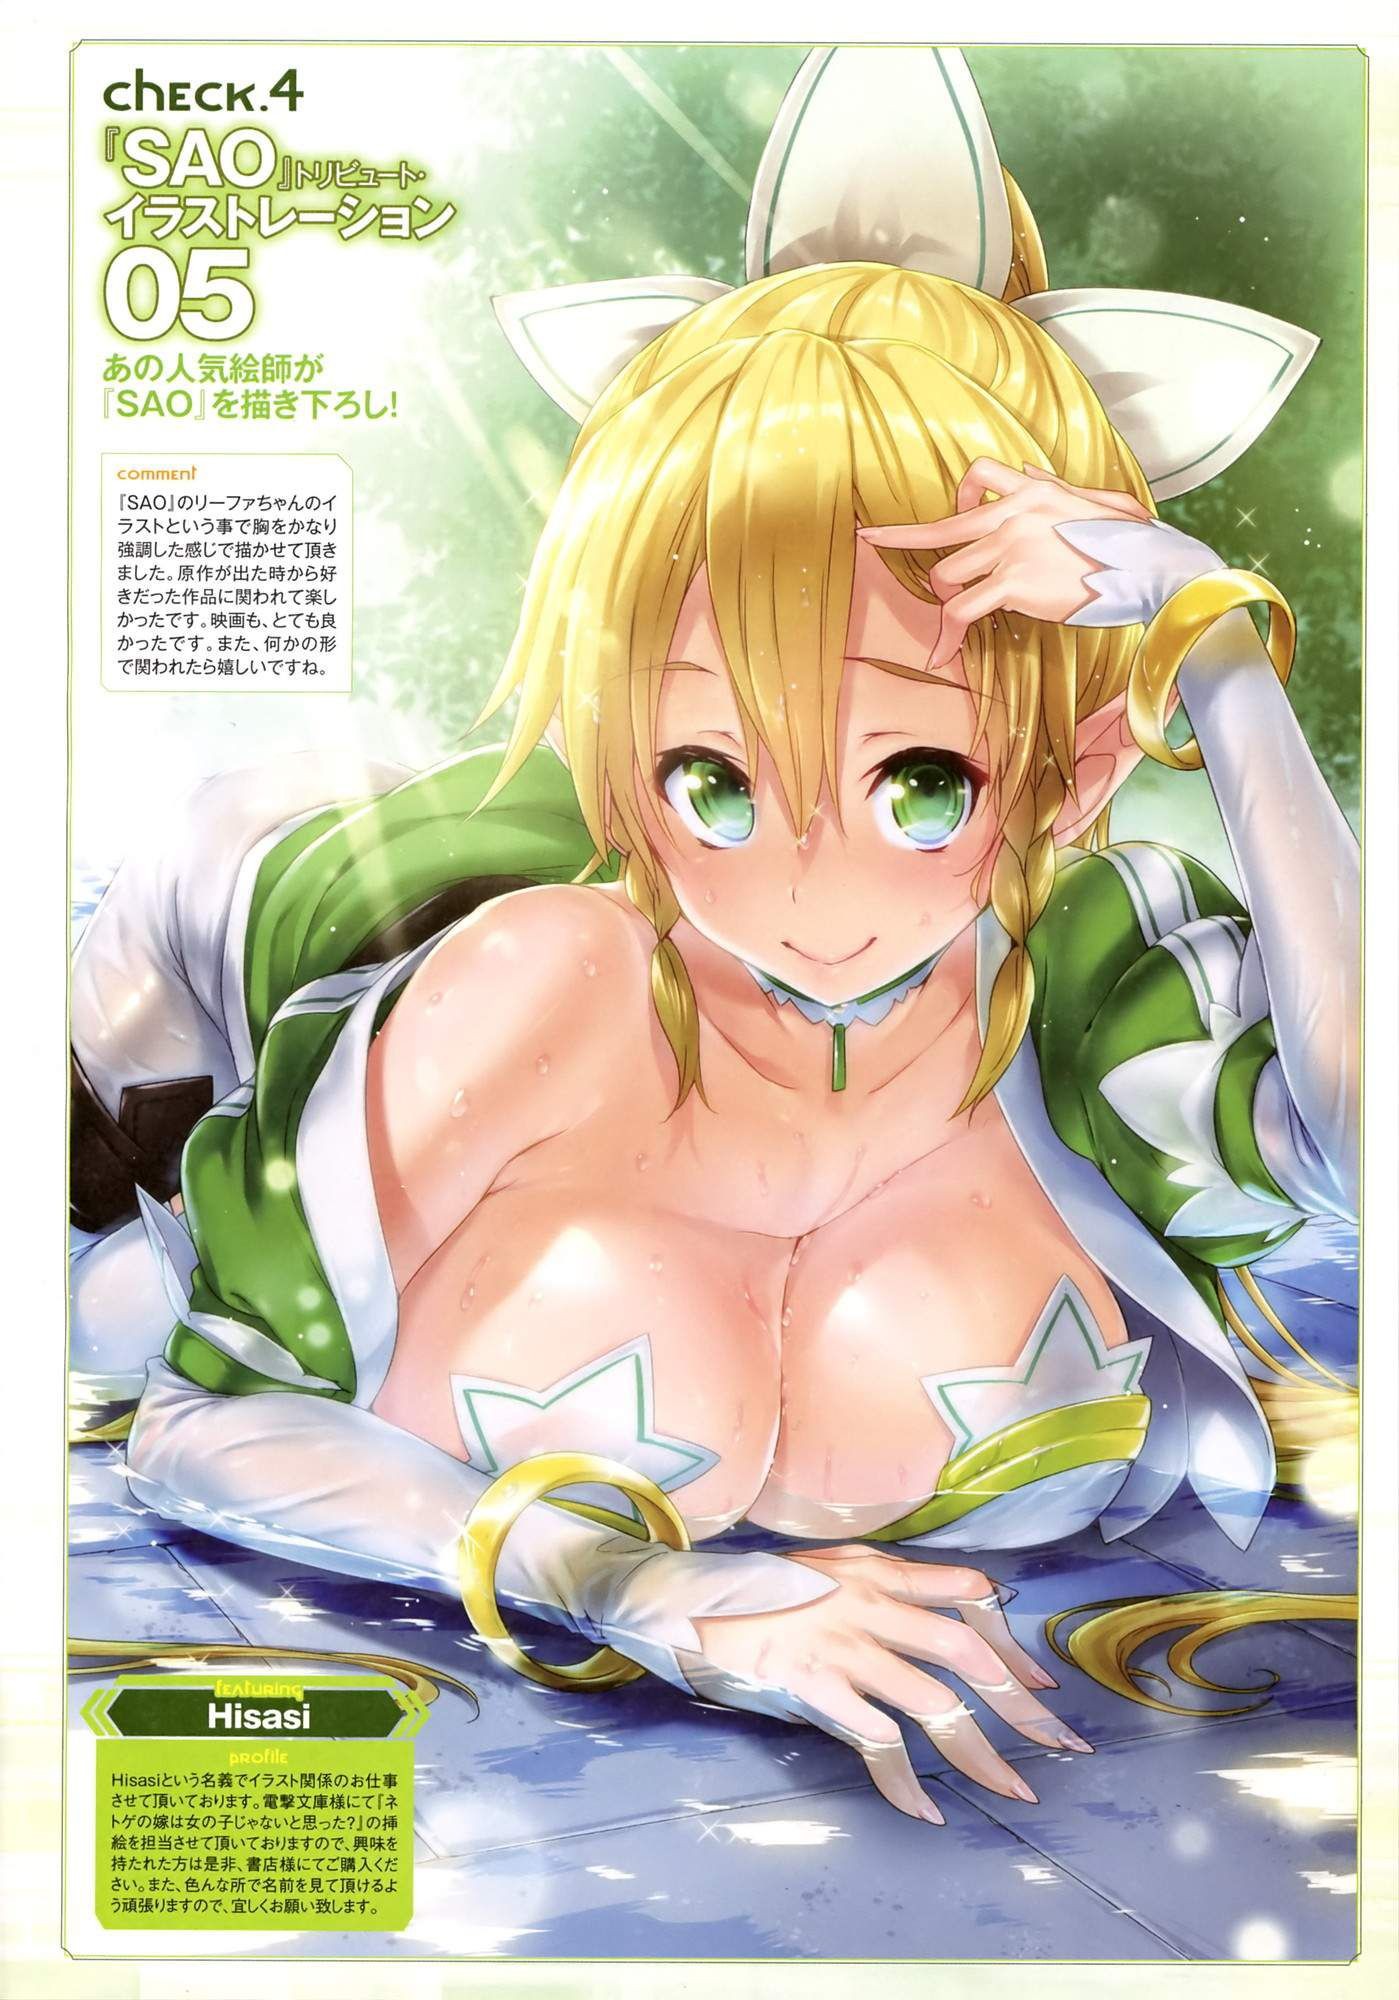 Cumload [Sword Art Online] (Kirigaya Suguha) Erotic & Moe Image â‘§ [SAO]  Peitos â€“ Hentai.bang14.com